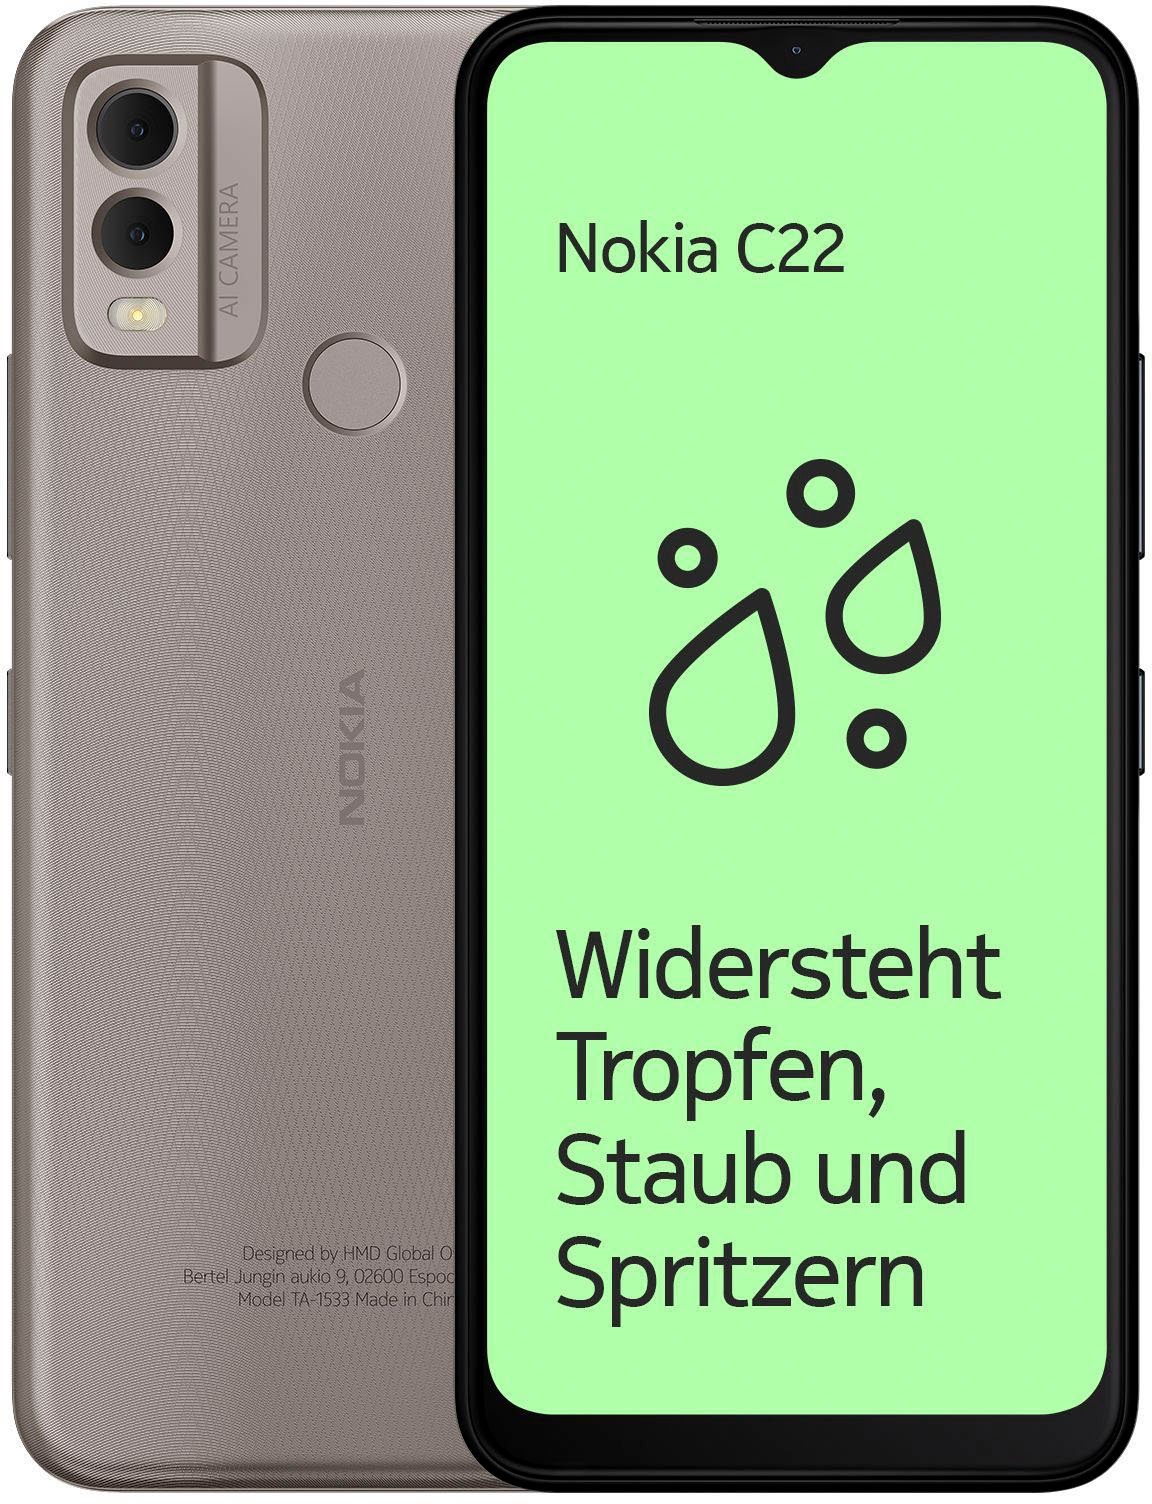 Speicherplatz, 64 Sand 13 C22, 2+64GB cm/6,52 Zoll, Smartphone Kamera) Nokia GB MP (16,56